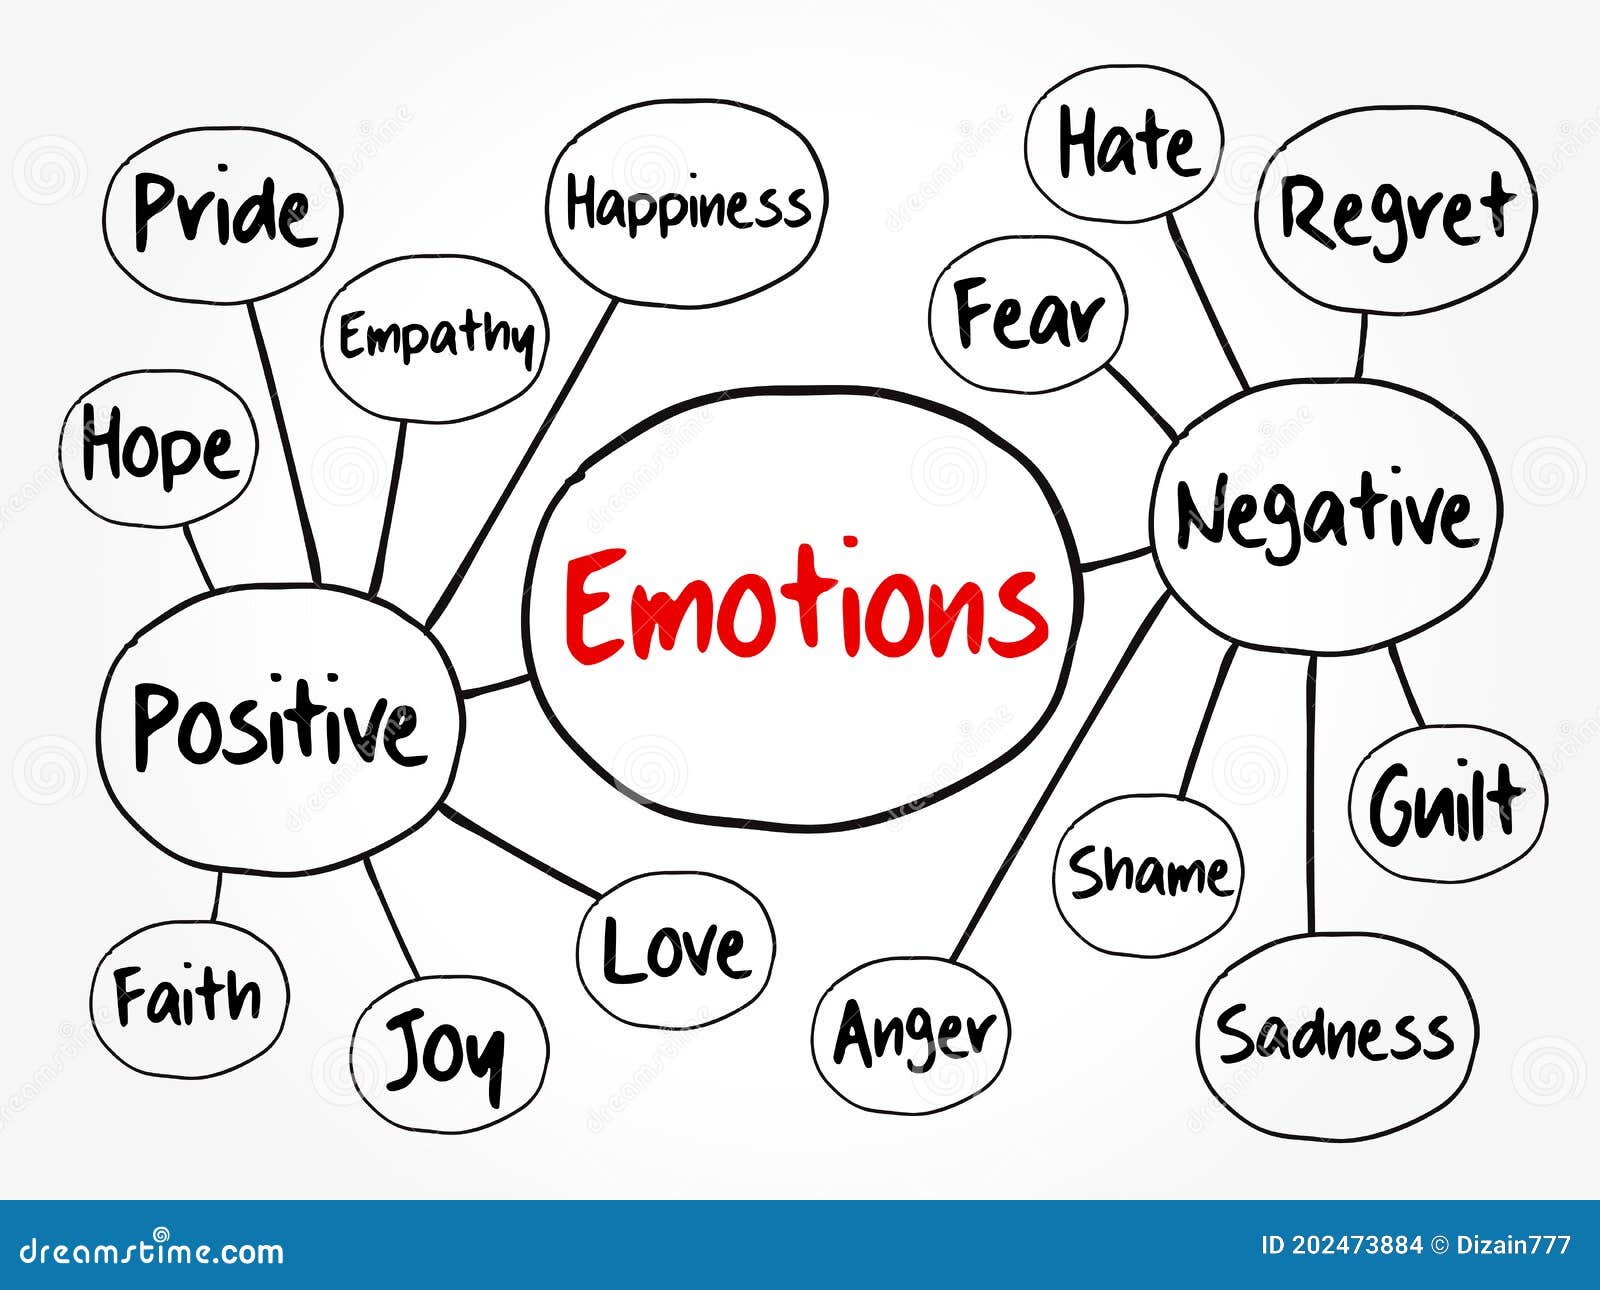 Human Emotion Mind Map Positive And Negative Emotions Stock Illustration Illustration Of